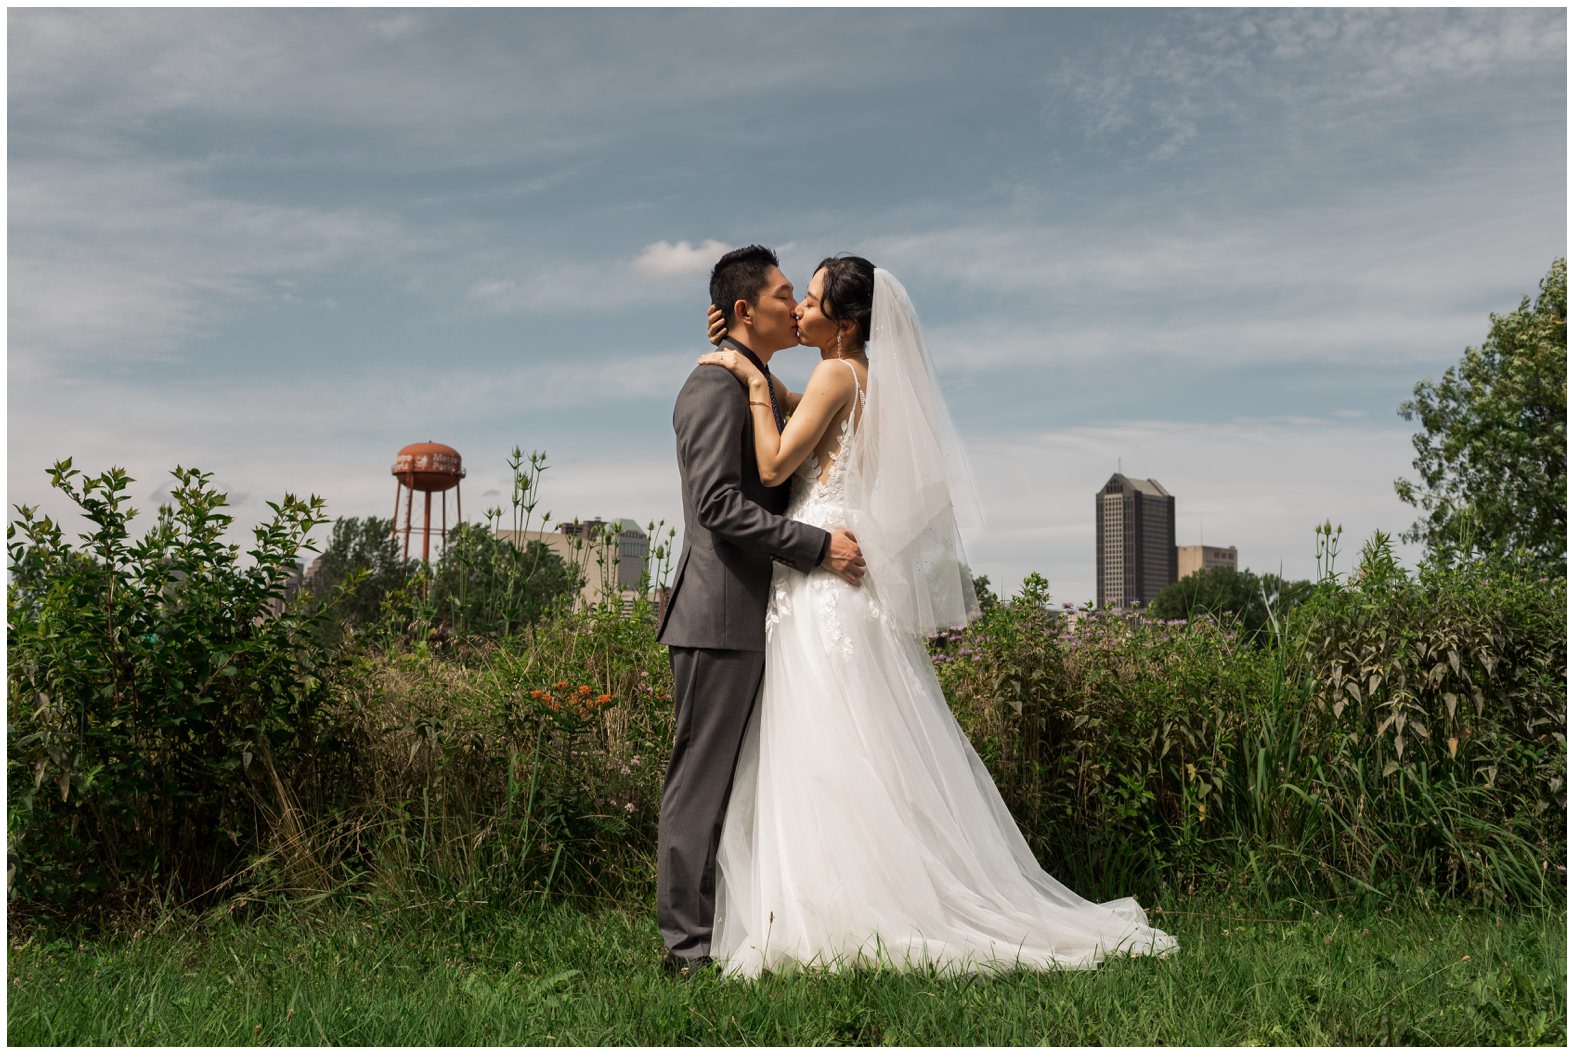 Adam Lowe Photography, Columbus, Ohio, Wedding, Fashion, Editorial, Stylish, Outdoor wedding, Midwest Wedding, Chinese Wedding, Audubon Center, Fine art wedding, Love